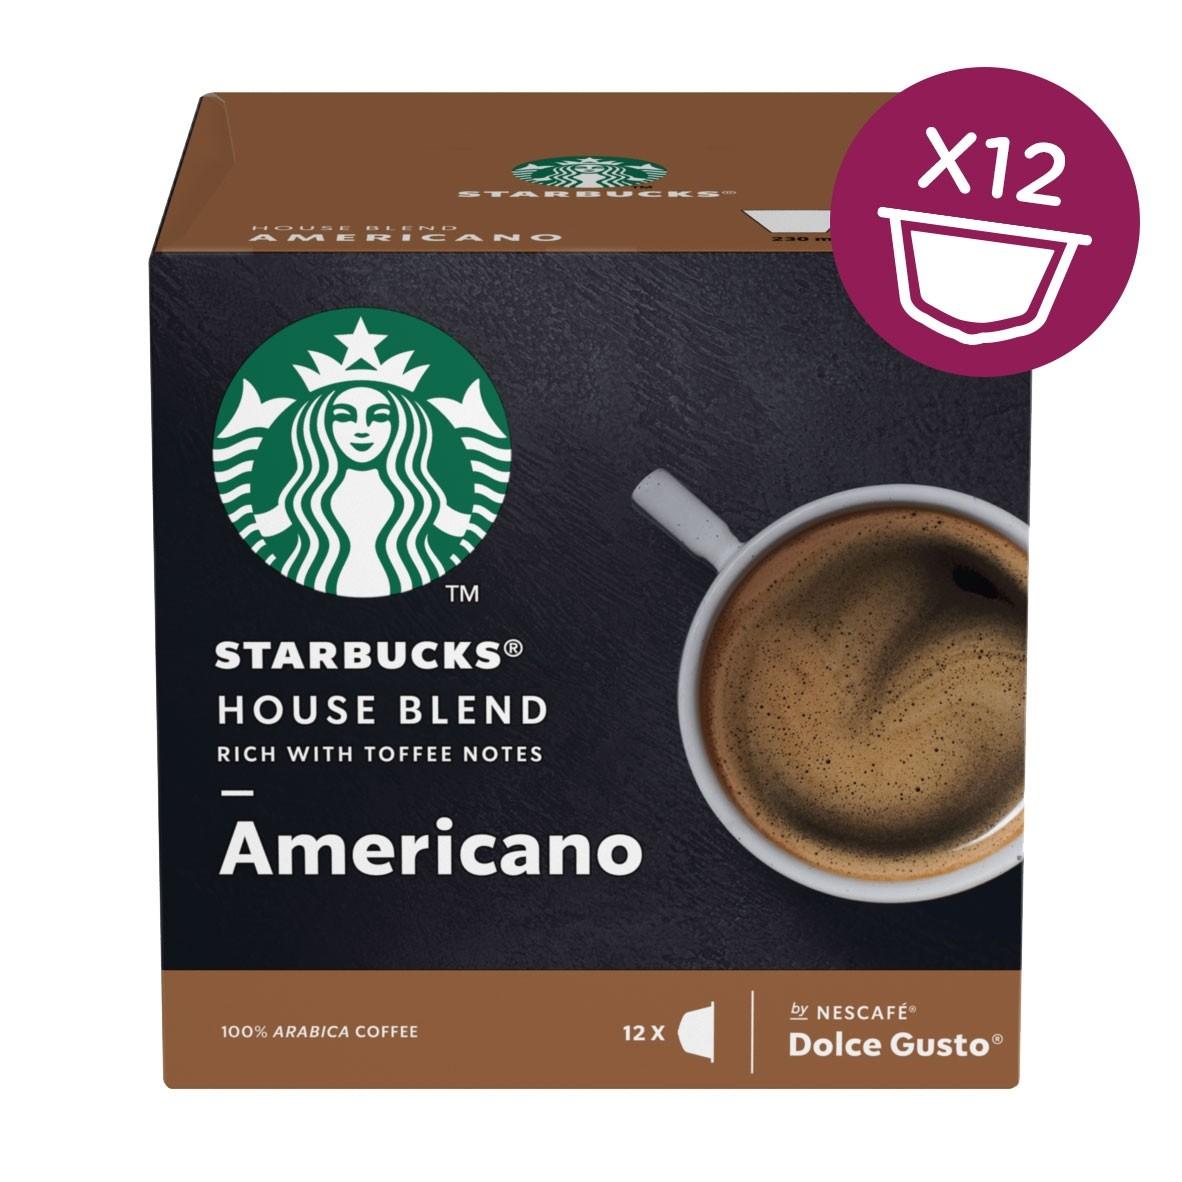 Starbucks House Blend Americano Roast Coffee Pod by Dolce Gusto (UK Imported) สตาร์บัค เฮาส์เบลนด์ อเมริกาโน่ กาแฟคั่วบด 8.5g. x 12capsules